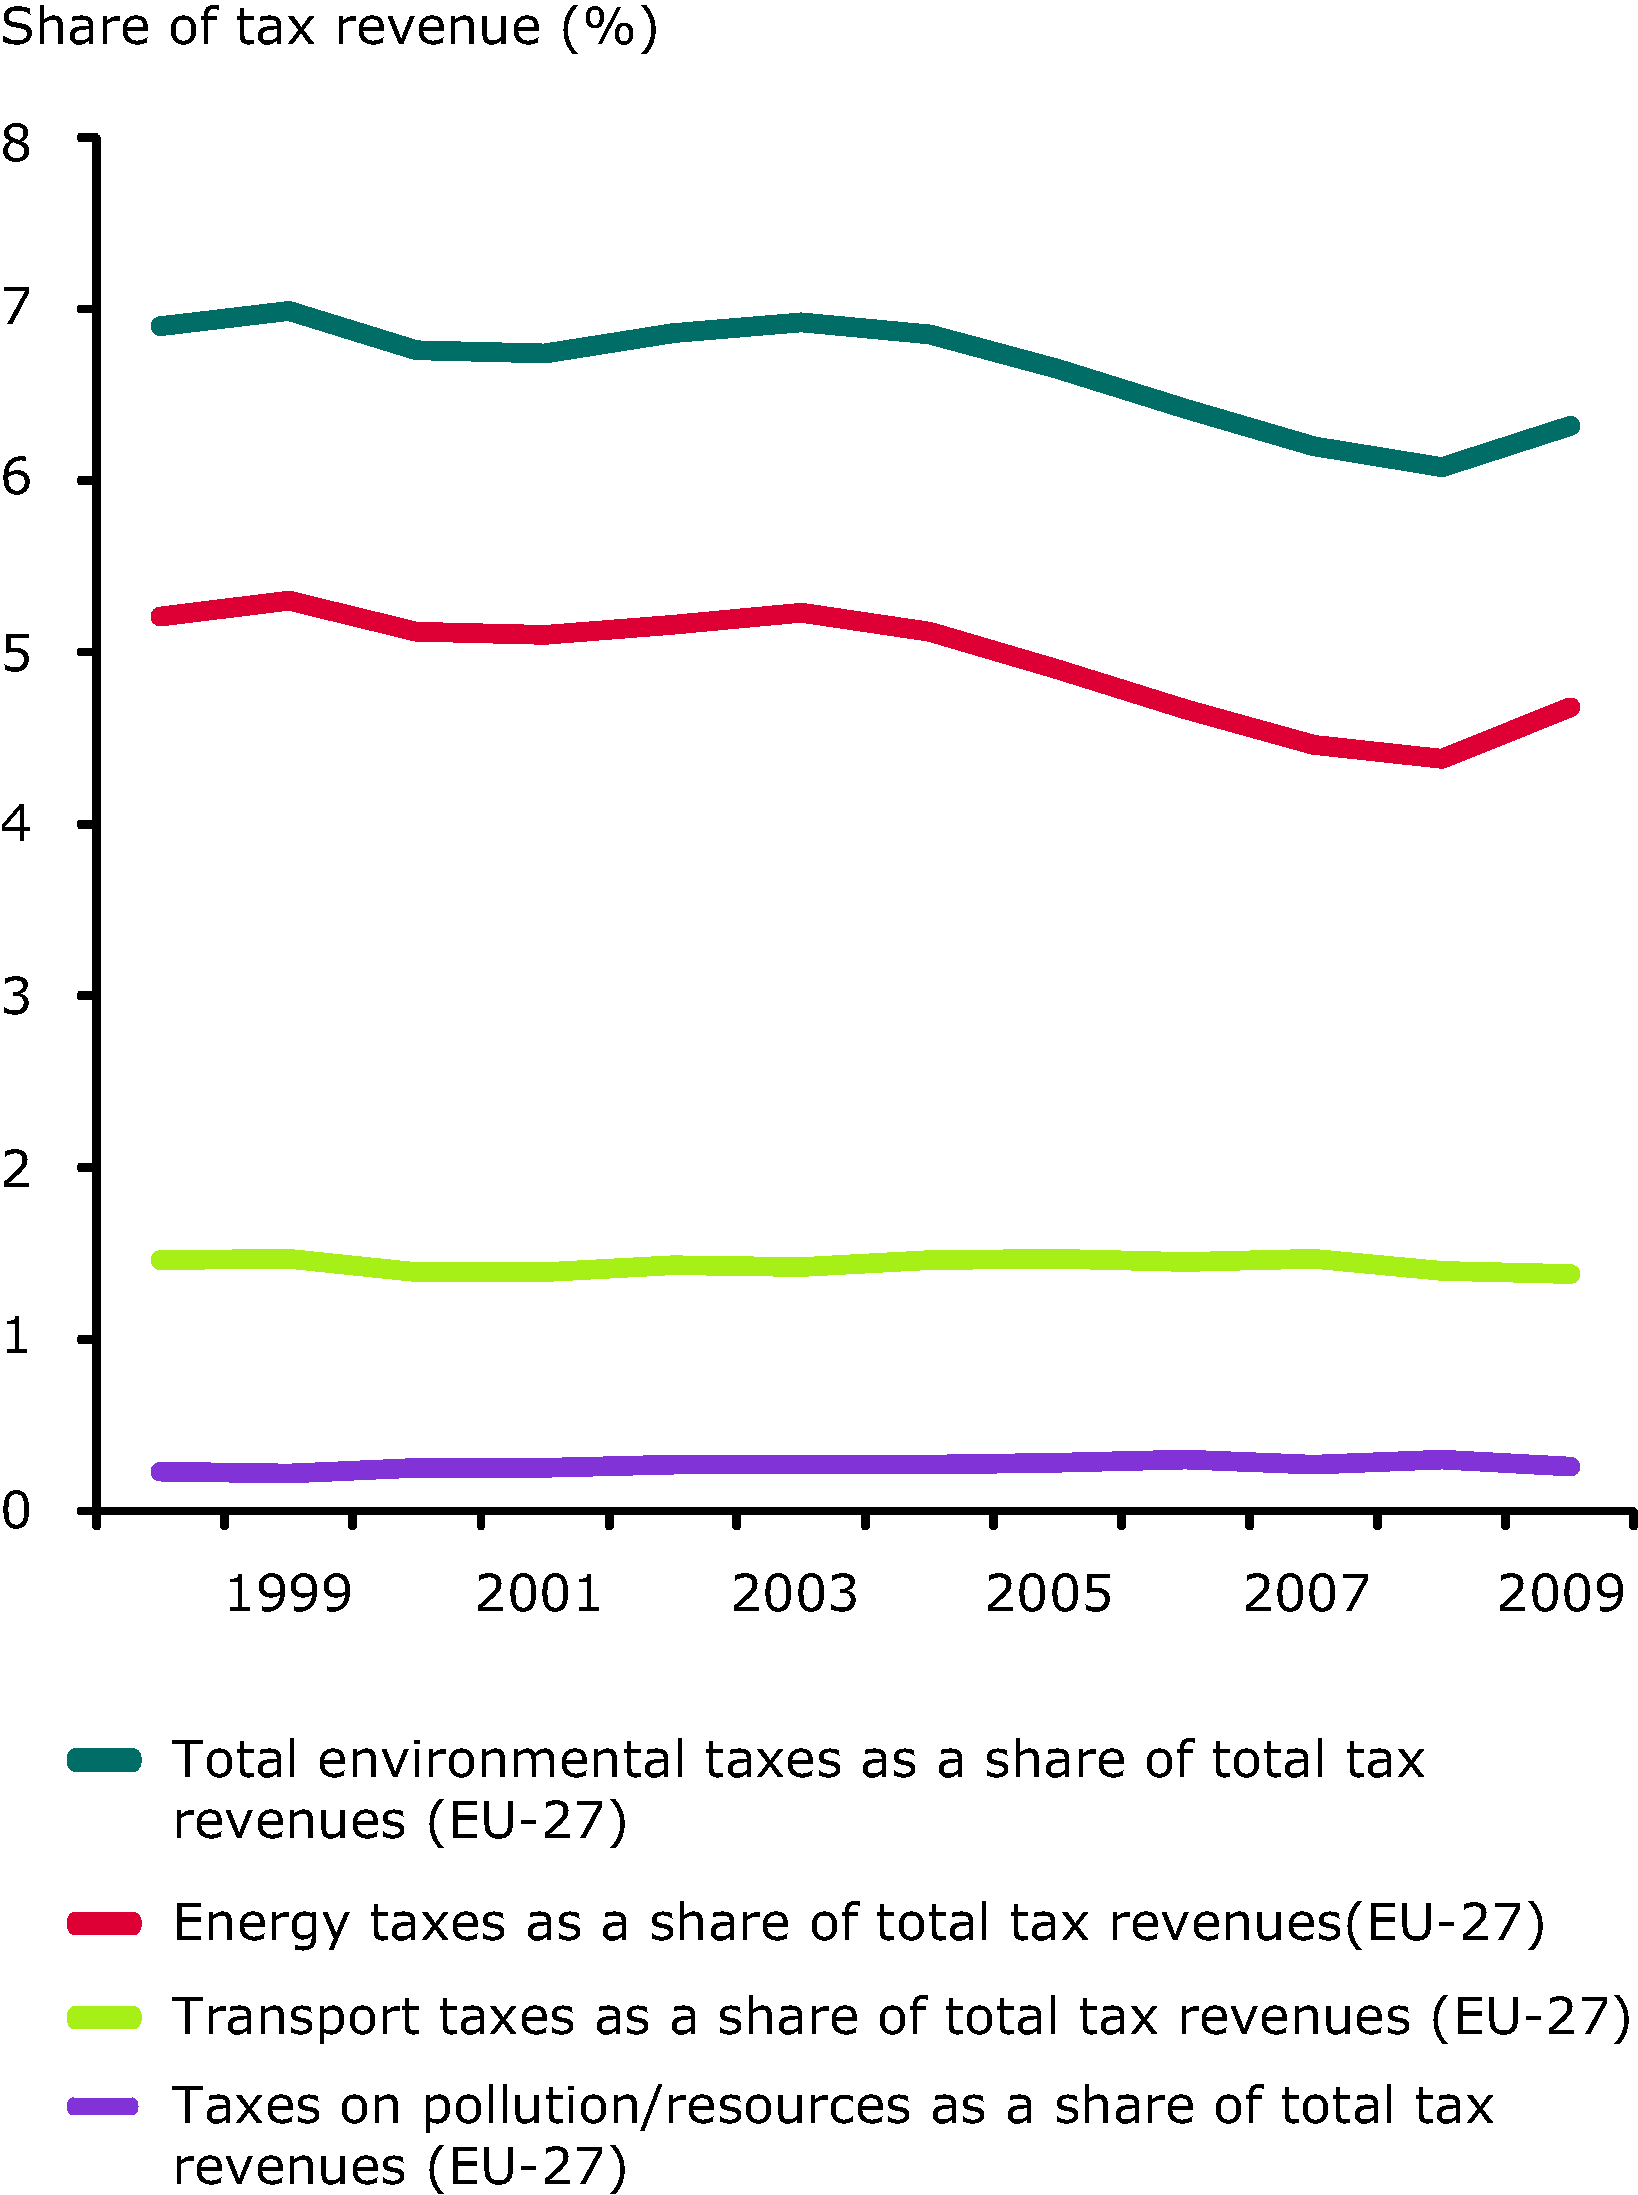 Environmental taxes revenue as a share of total tax revenues, EU-27, 1998-2008